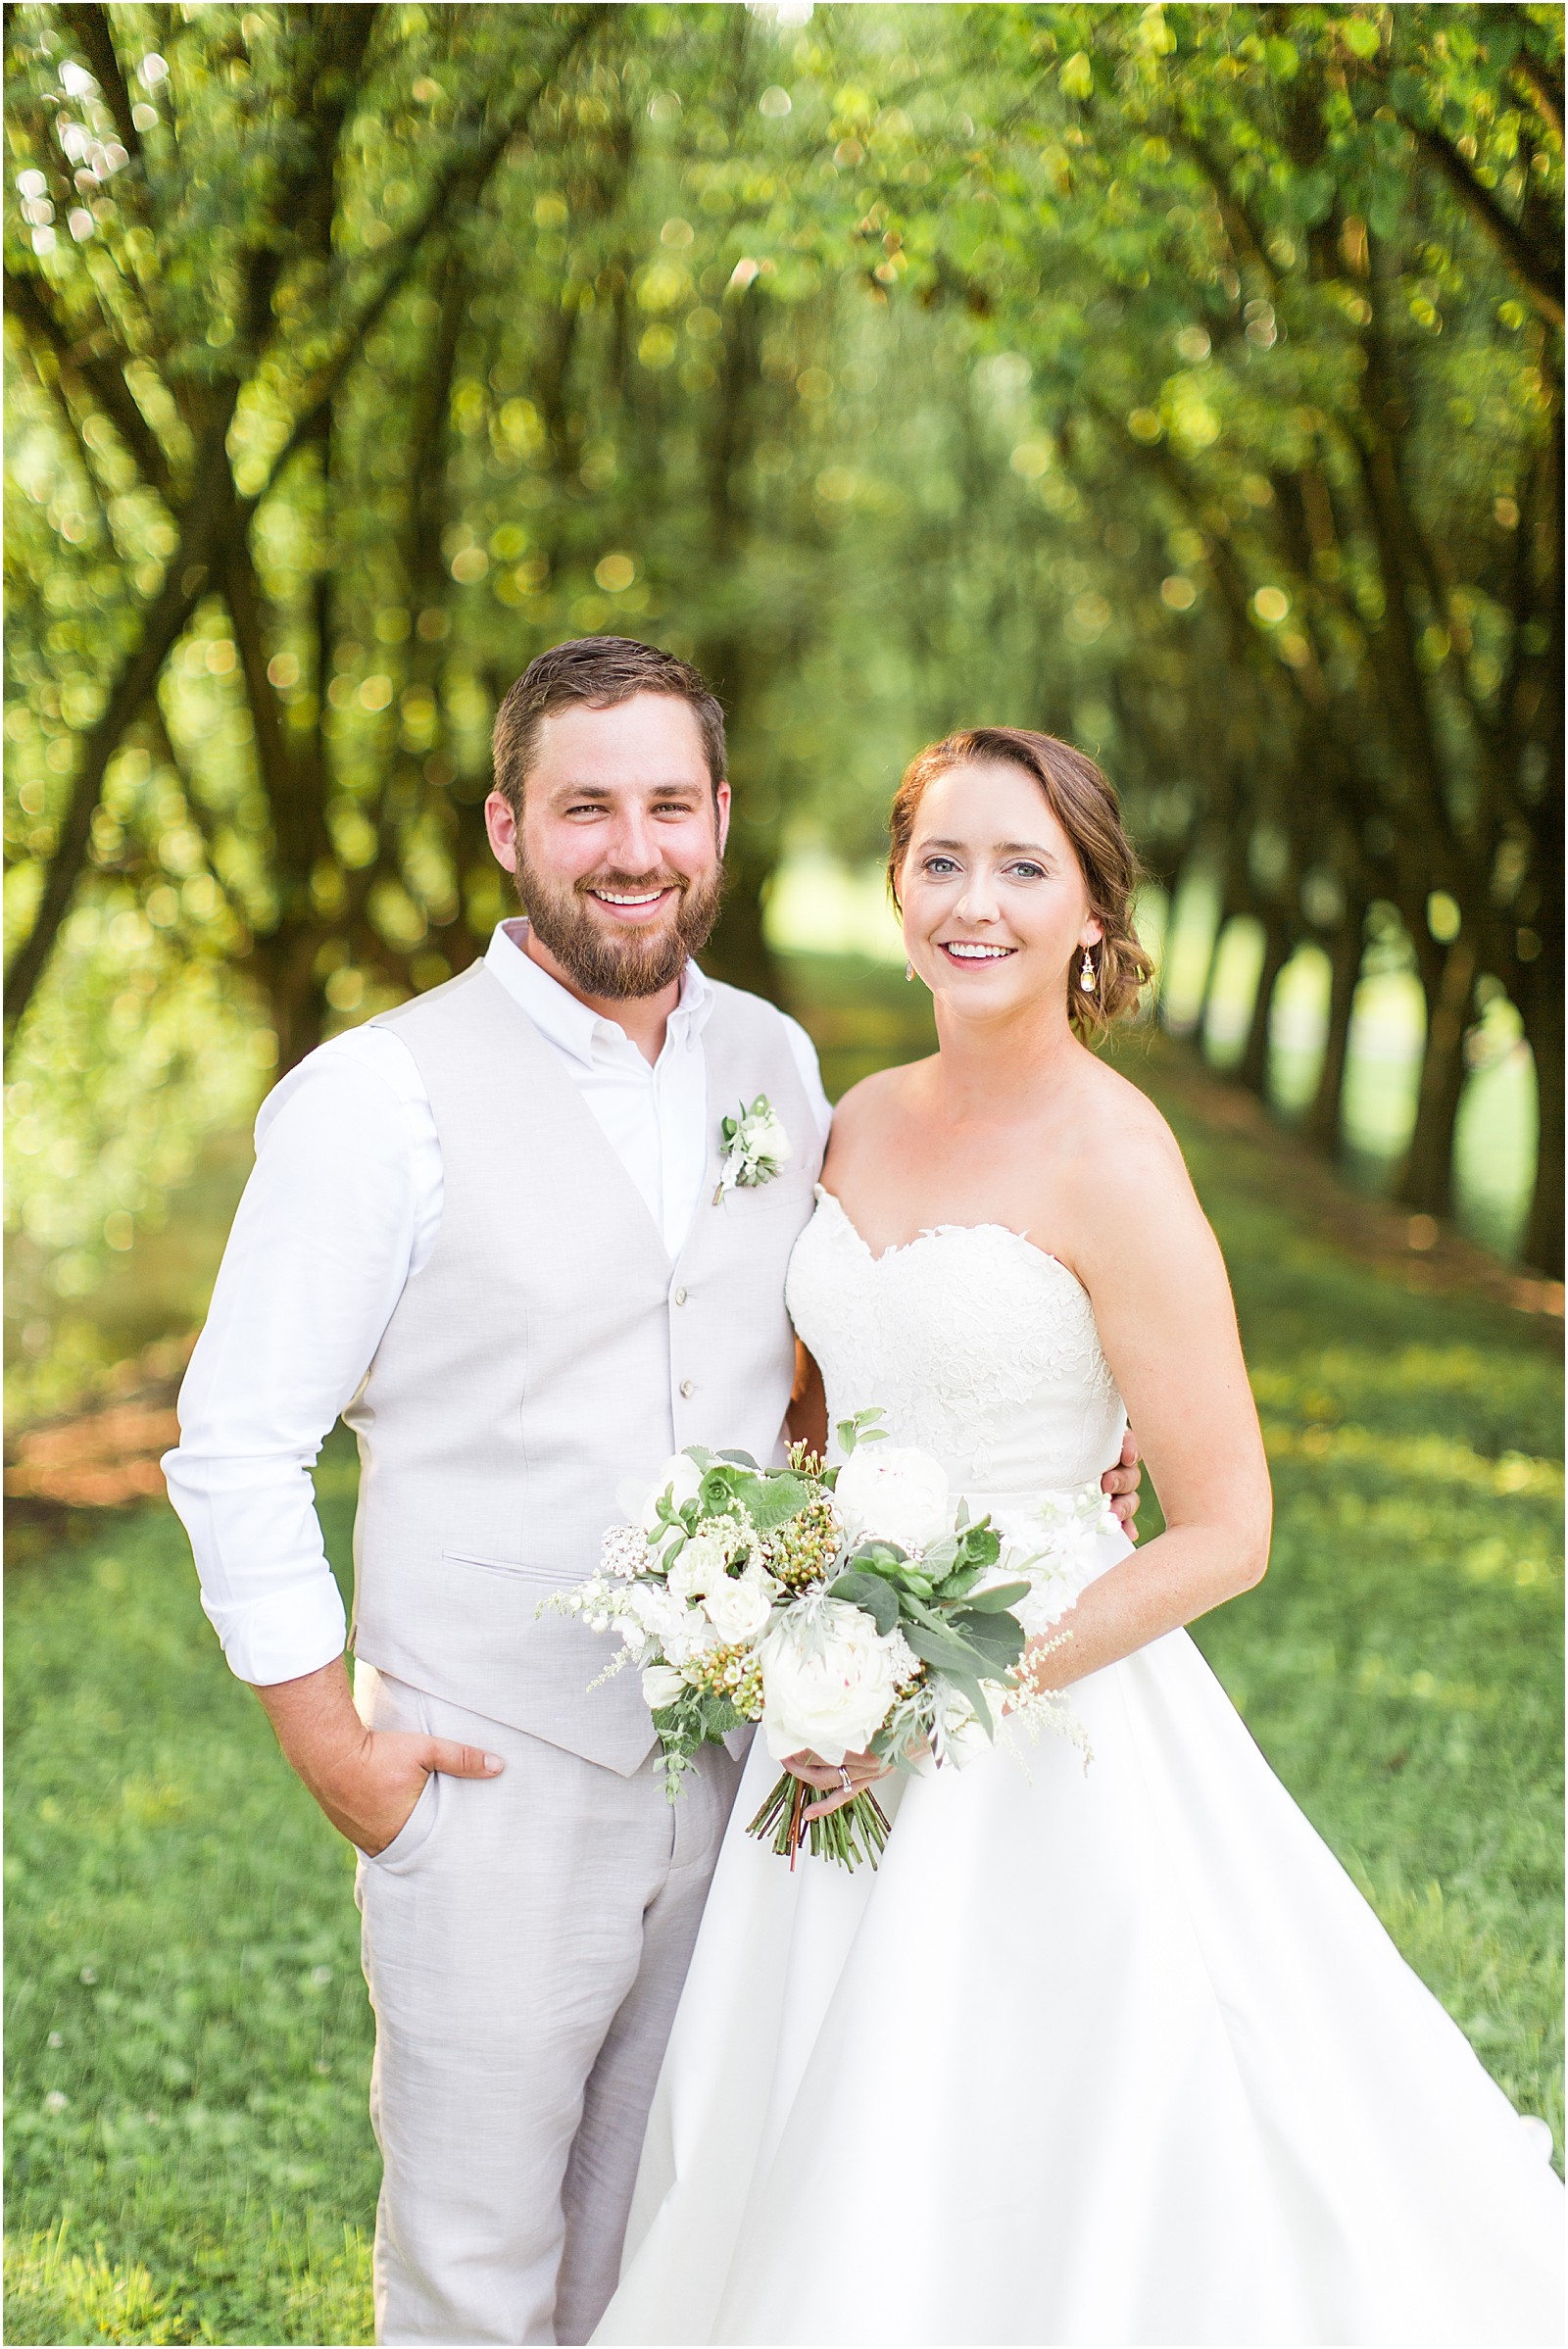 A Evansville Indiana Backyard Wedding | Bailey and Ben 070.jpg